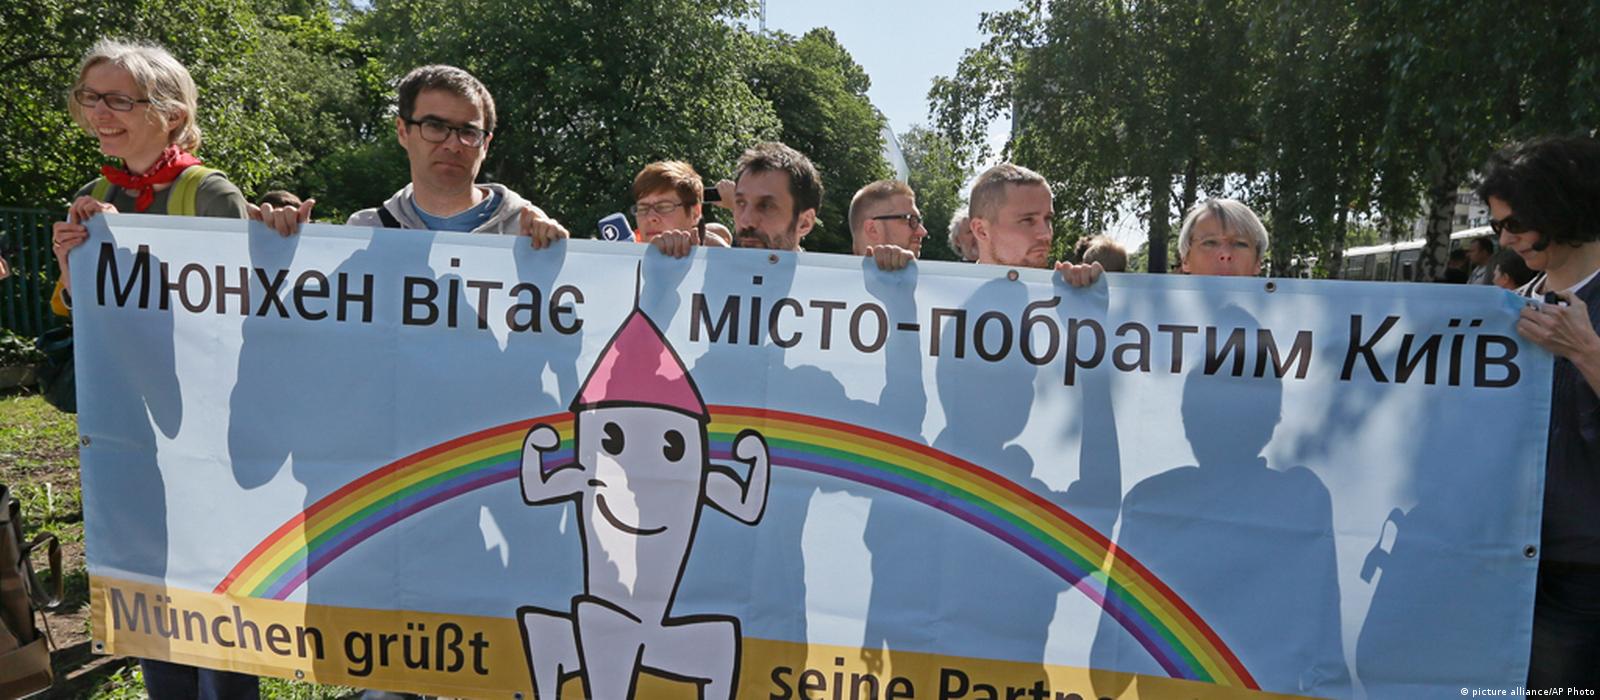 Бургомистр Мюнхена удивился отсутствию на гей-параде киевского мэра – DW –  25.05.2013